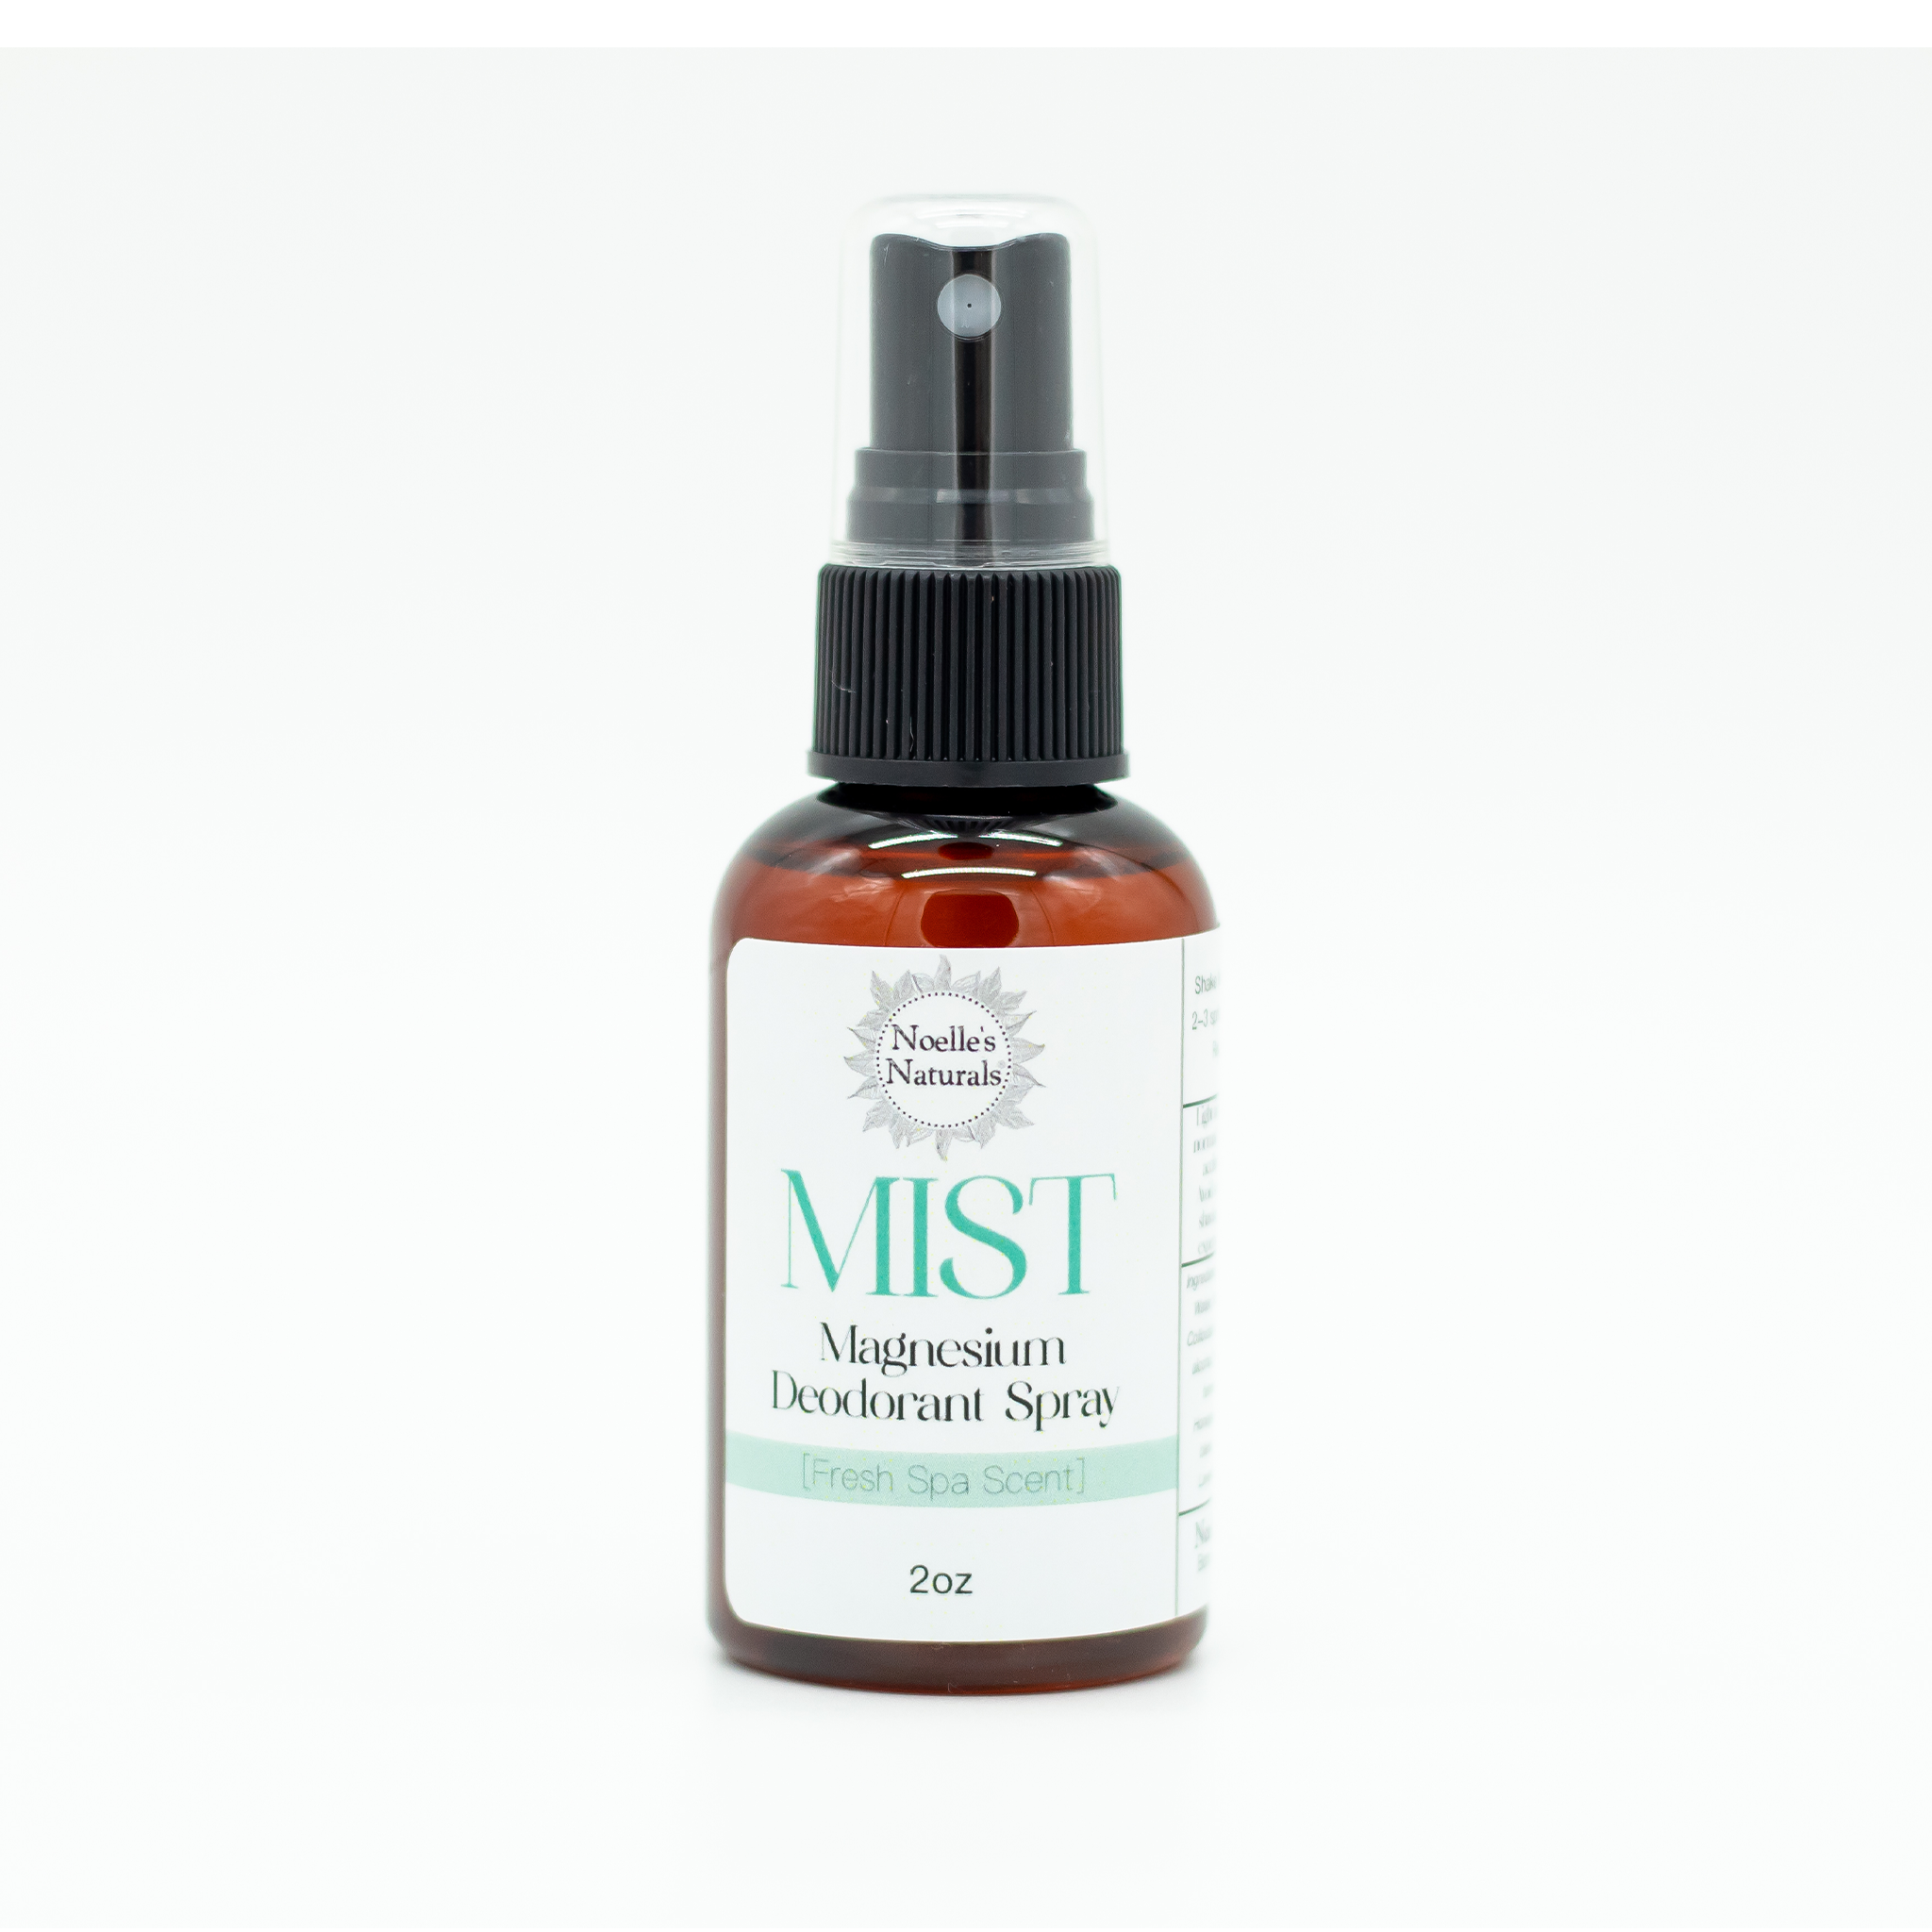 Mist - Magnesium Spray Deodorant - 2oz